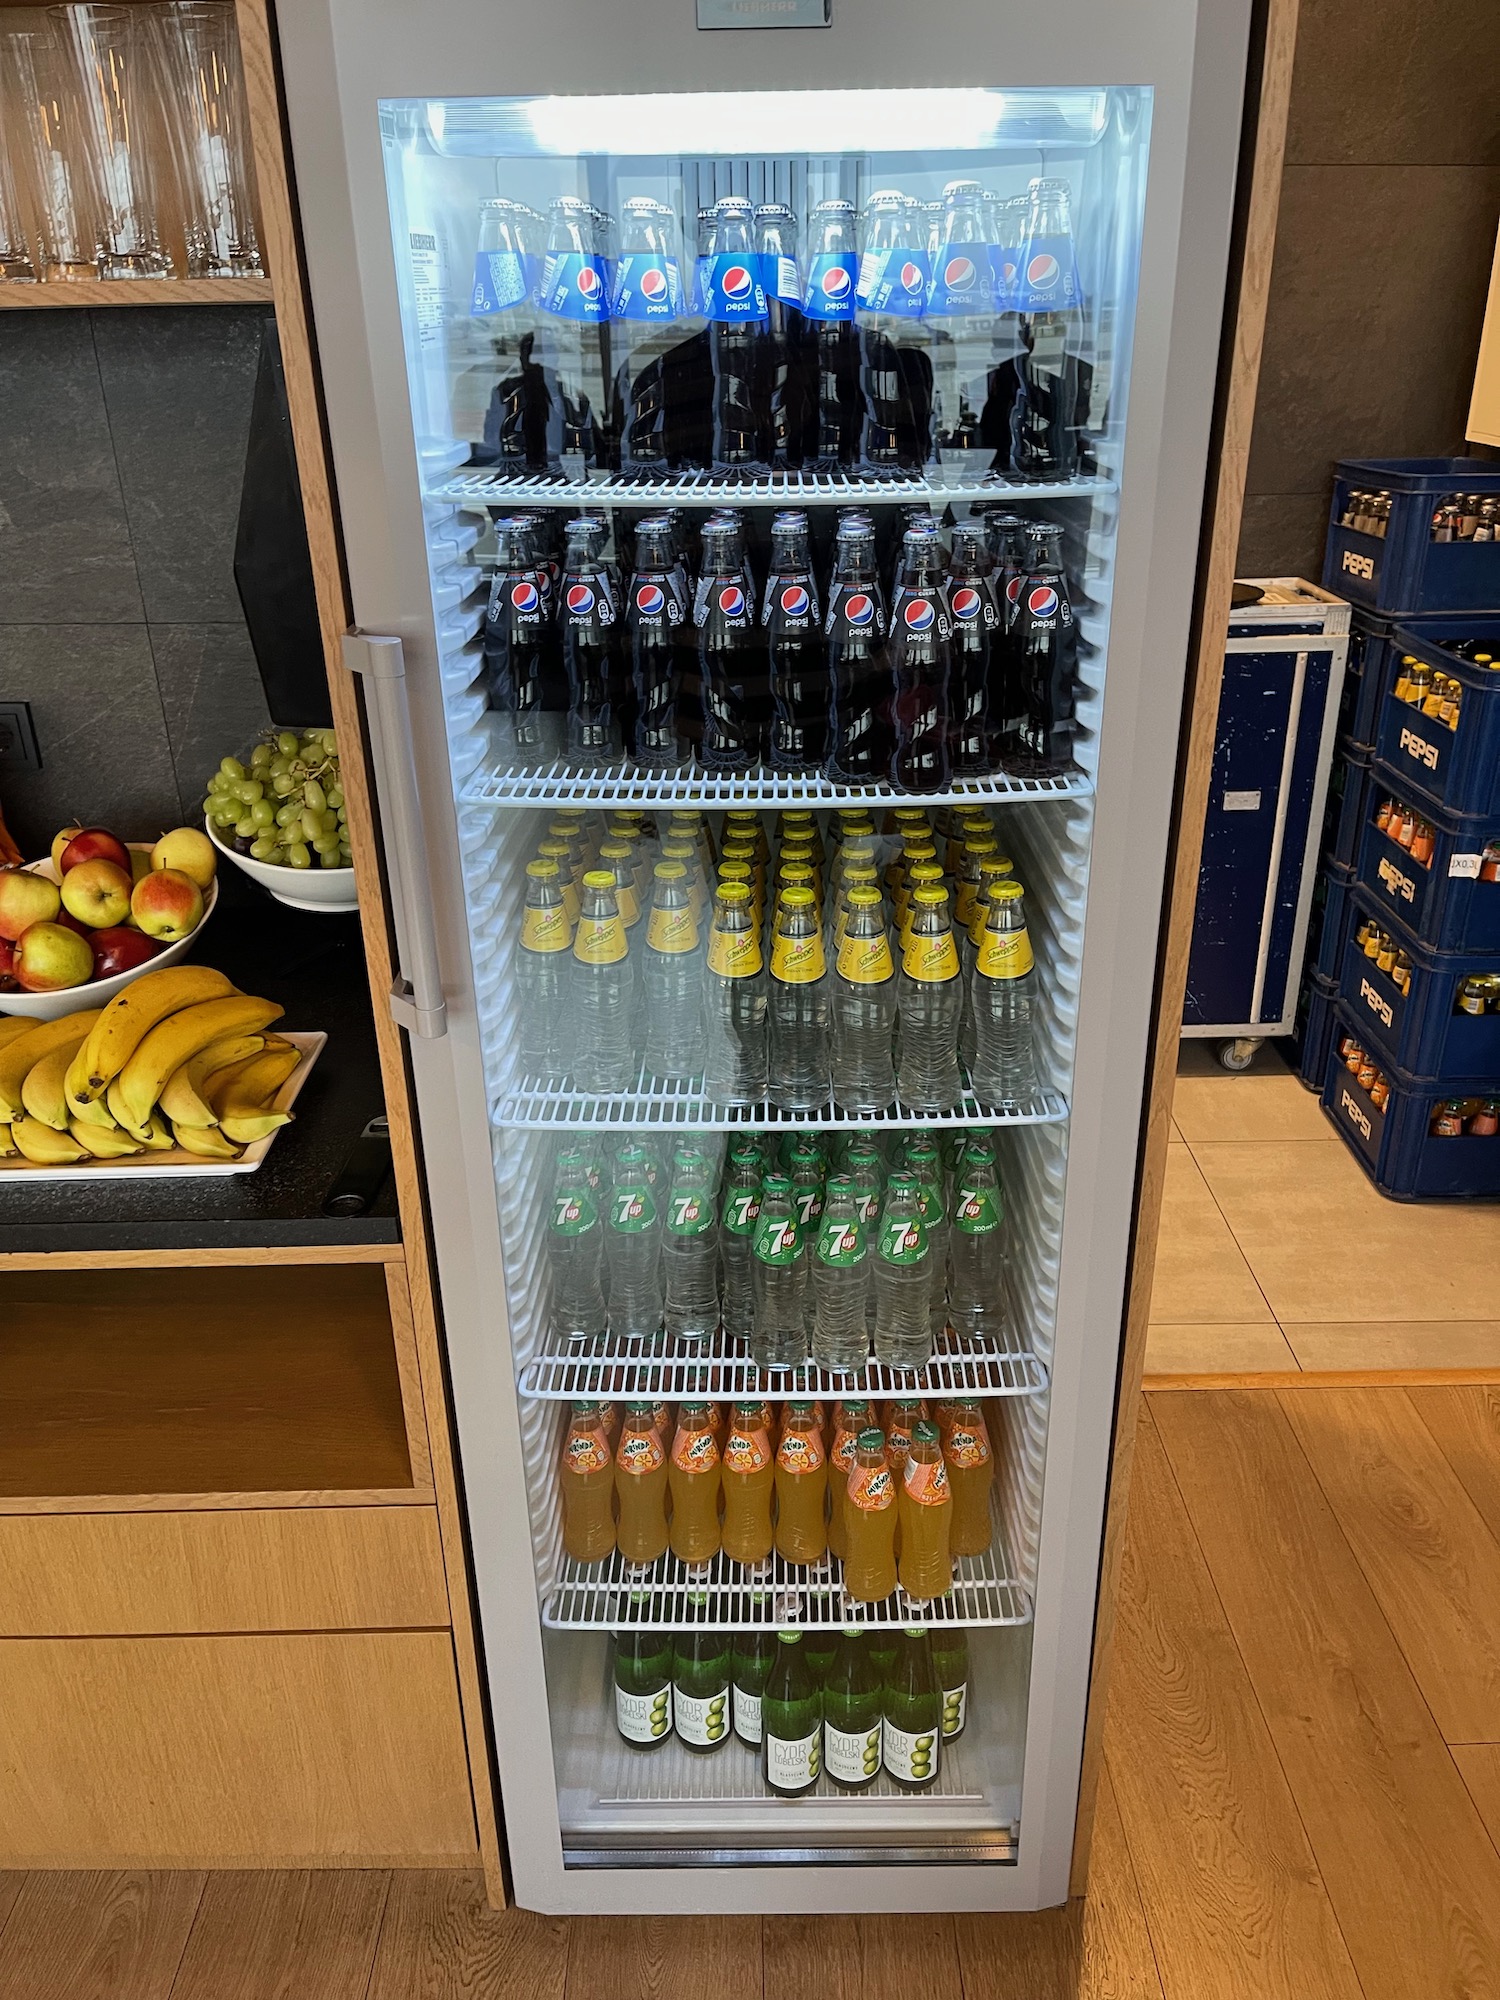 a refrigerator full of soda bottles and fruit